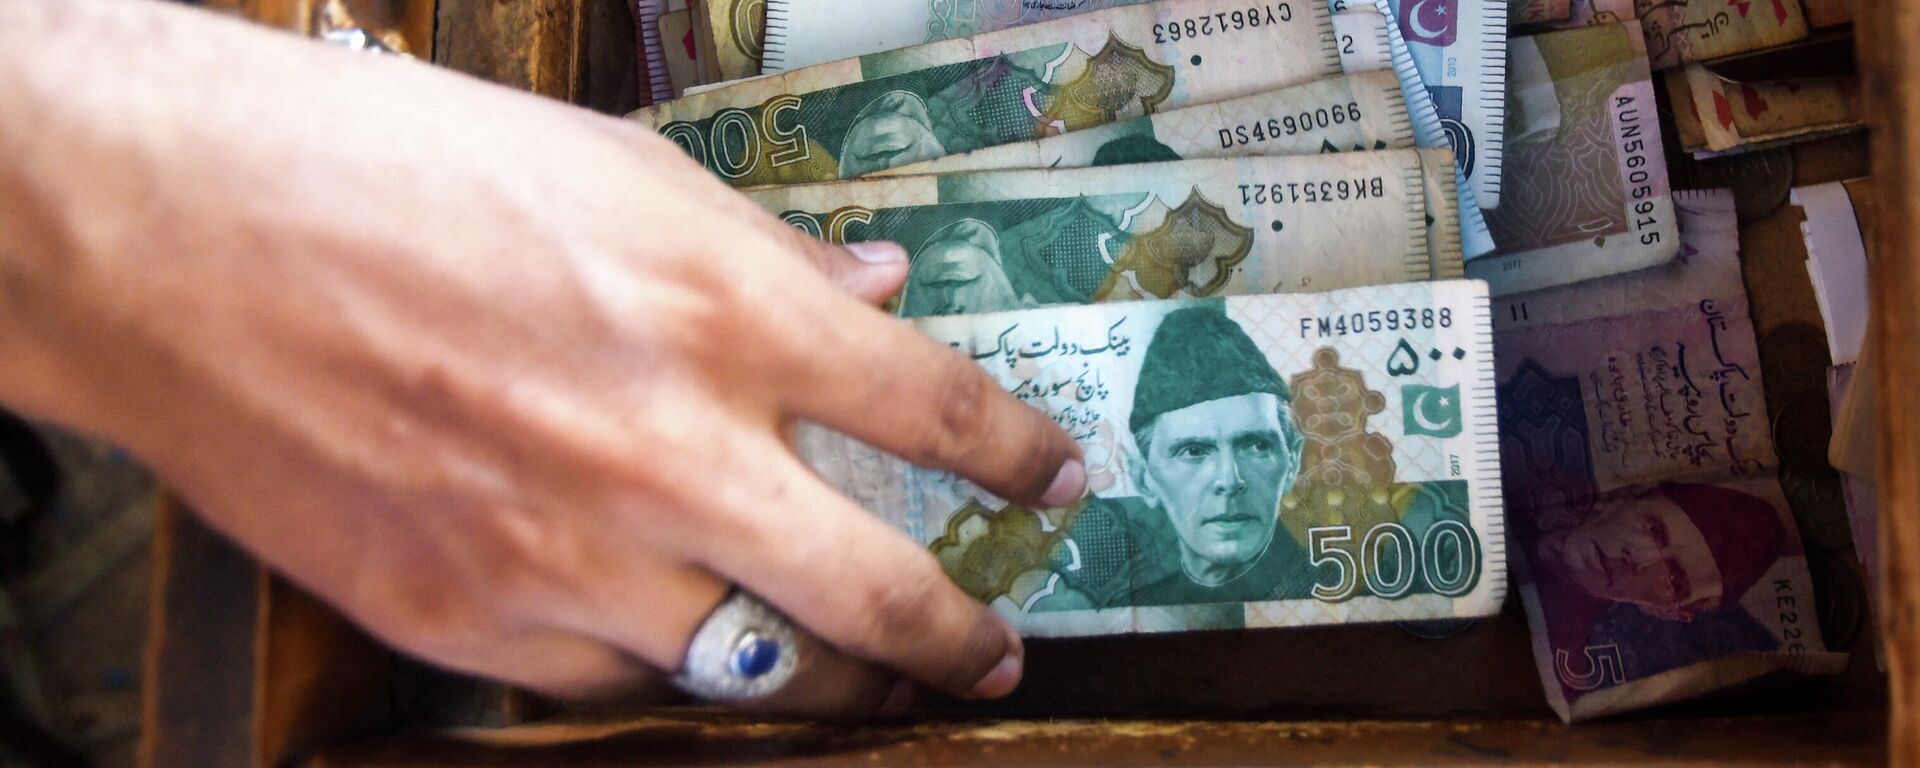 A Pakistani man counts Pakistan's rupees at his shop in Karachi on May 16, 2019 - Sputnik International, 1920, 19.05.2022